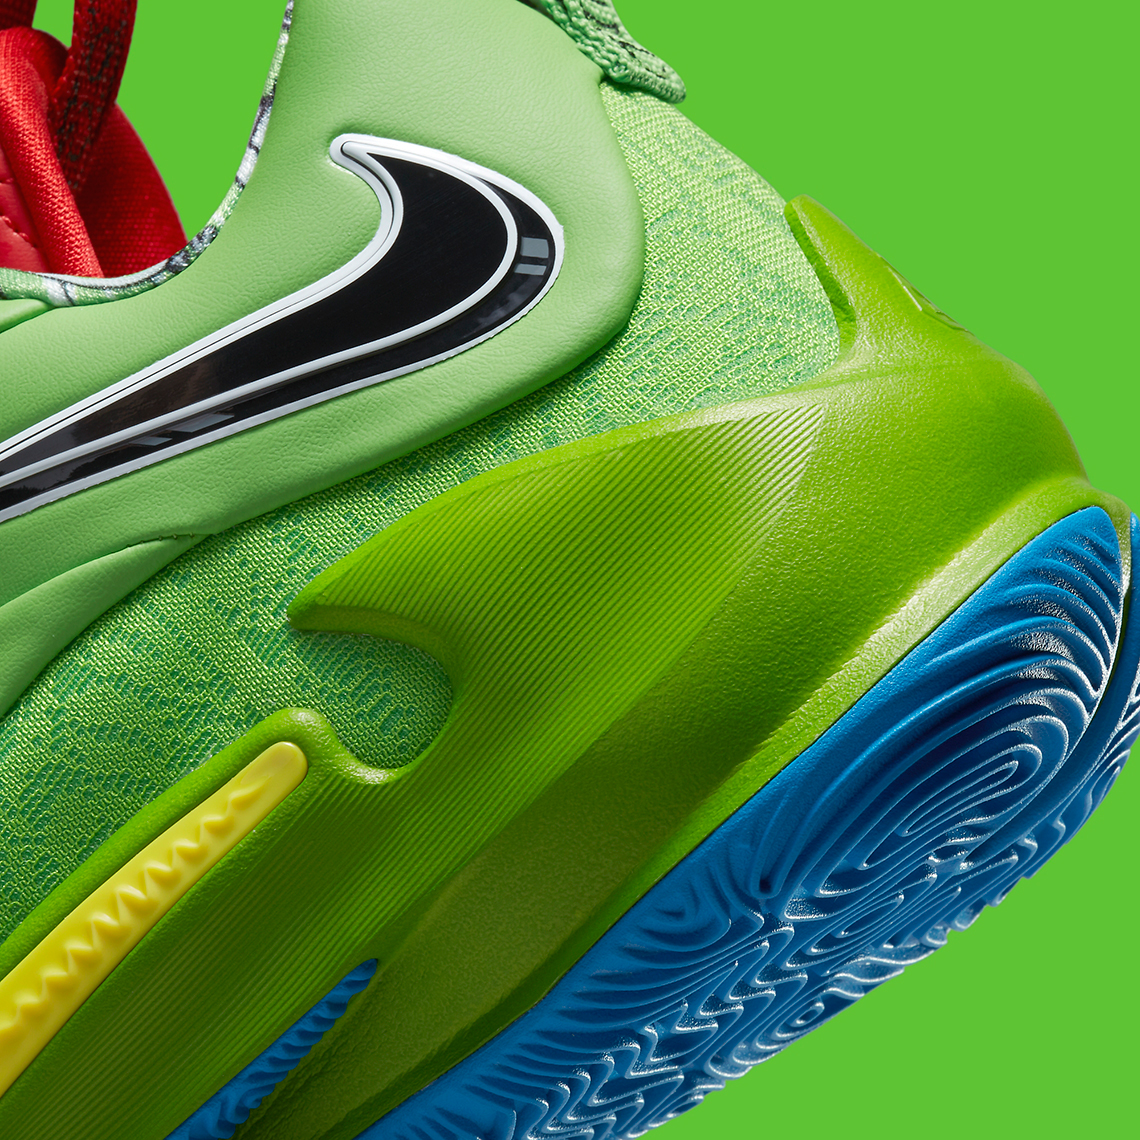 Nike Nike Air Jordan kicks in black and white Nrg Uno Green Bean Dc9364 300 5